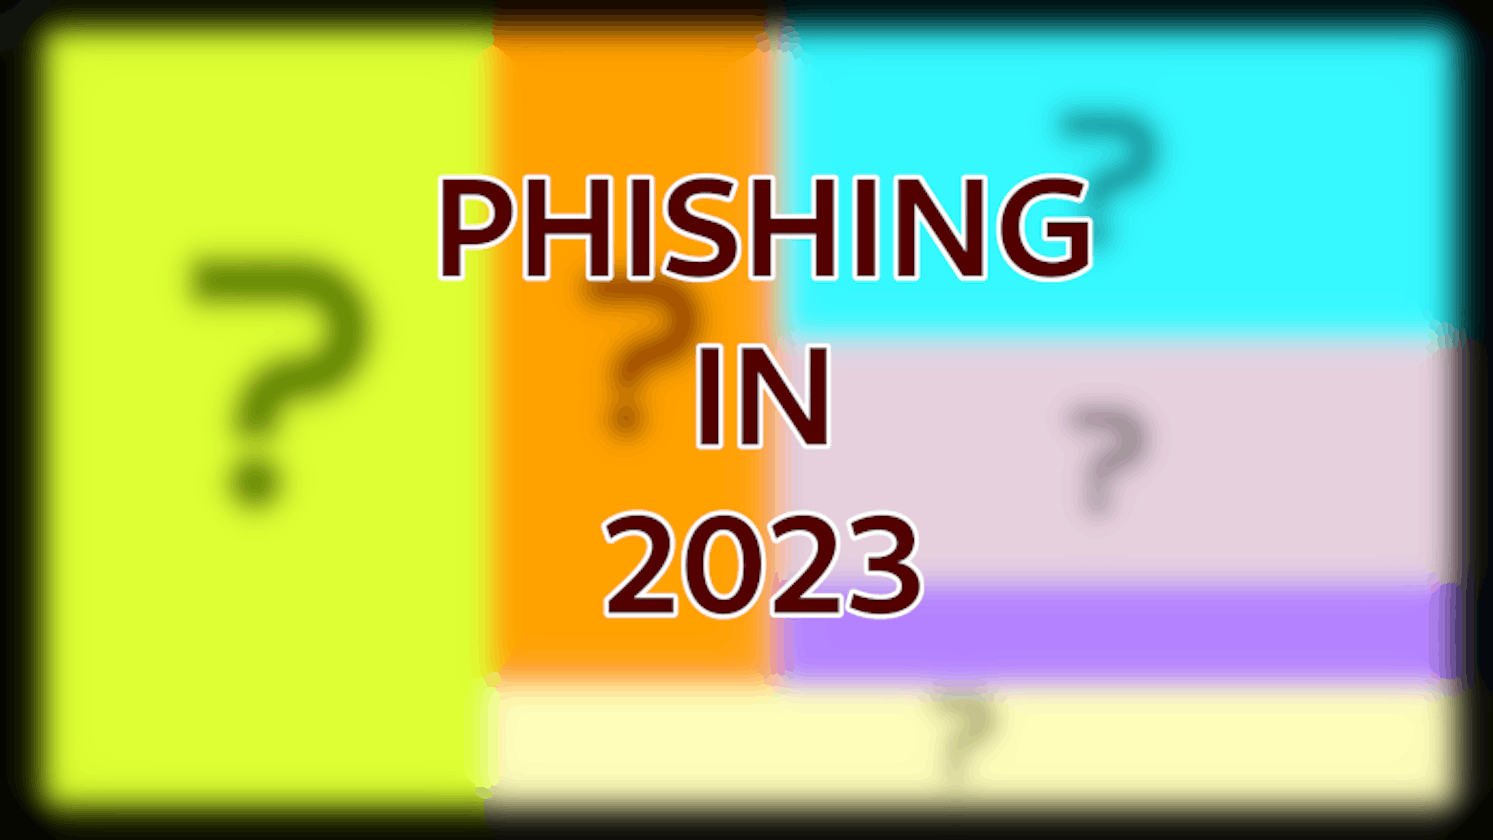 What's Phishing Like In 2023?